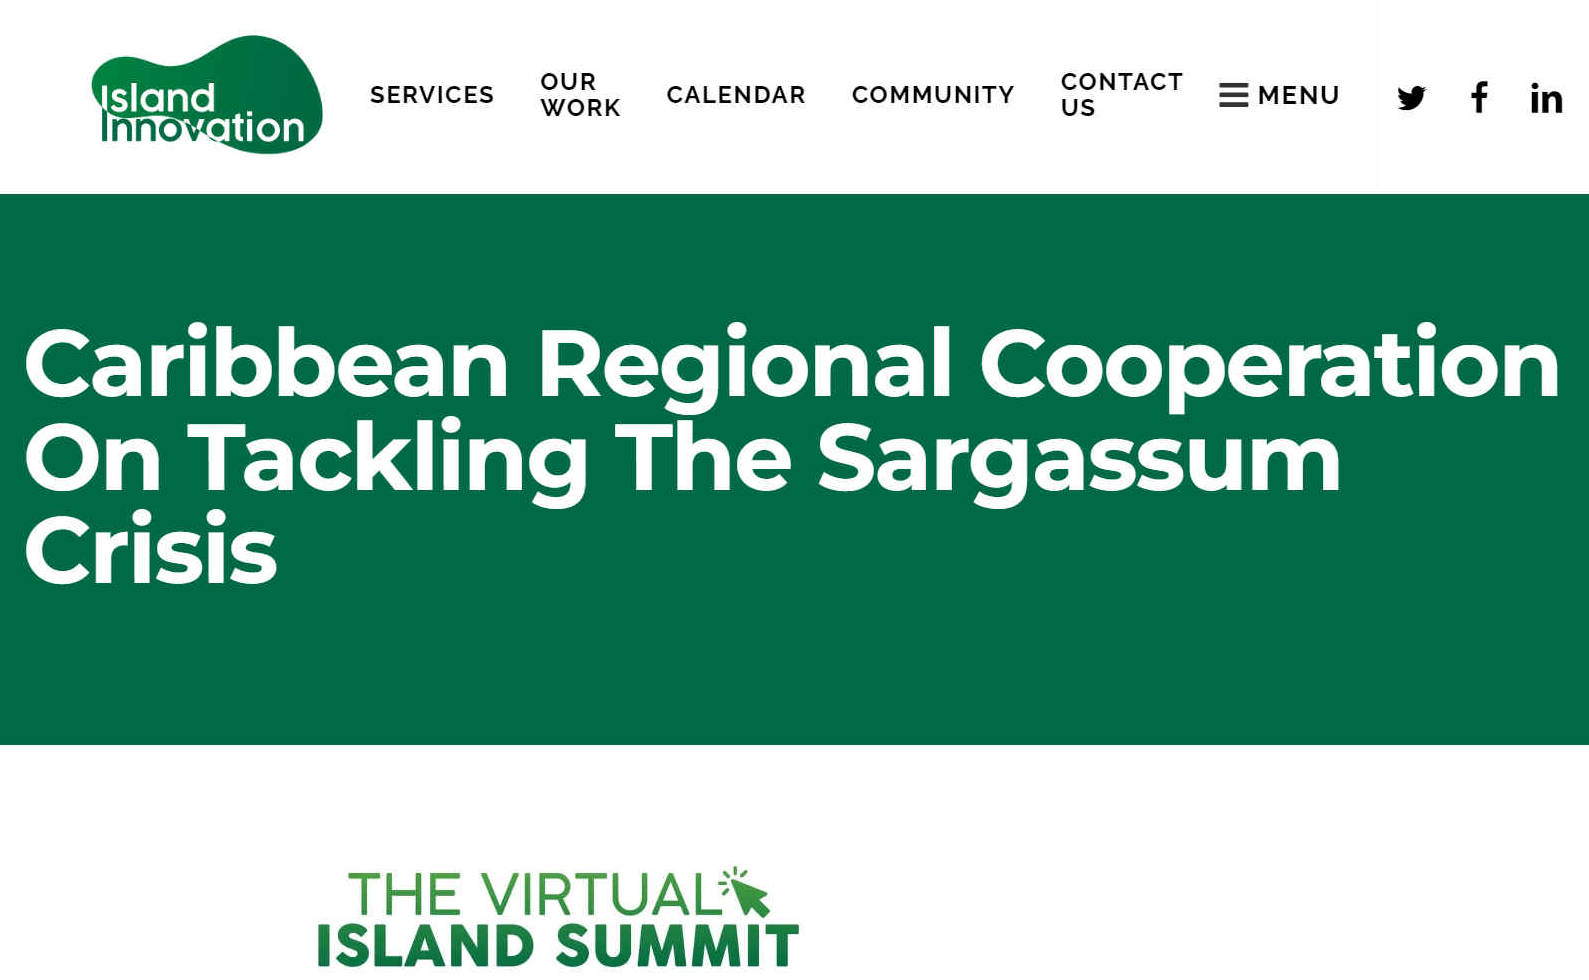 Caribbean Island cooperation on tackling the sargassum crisis